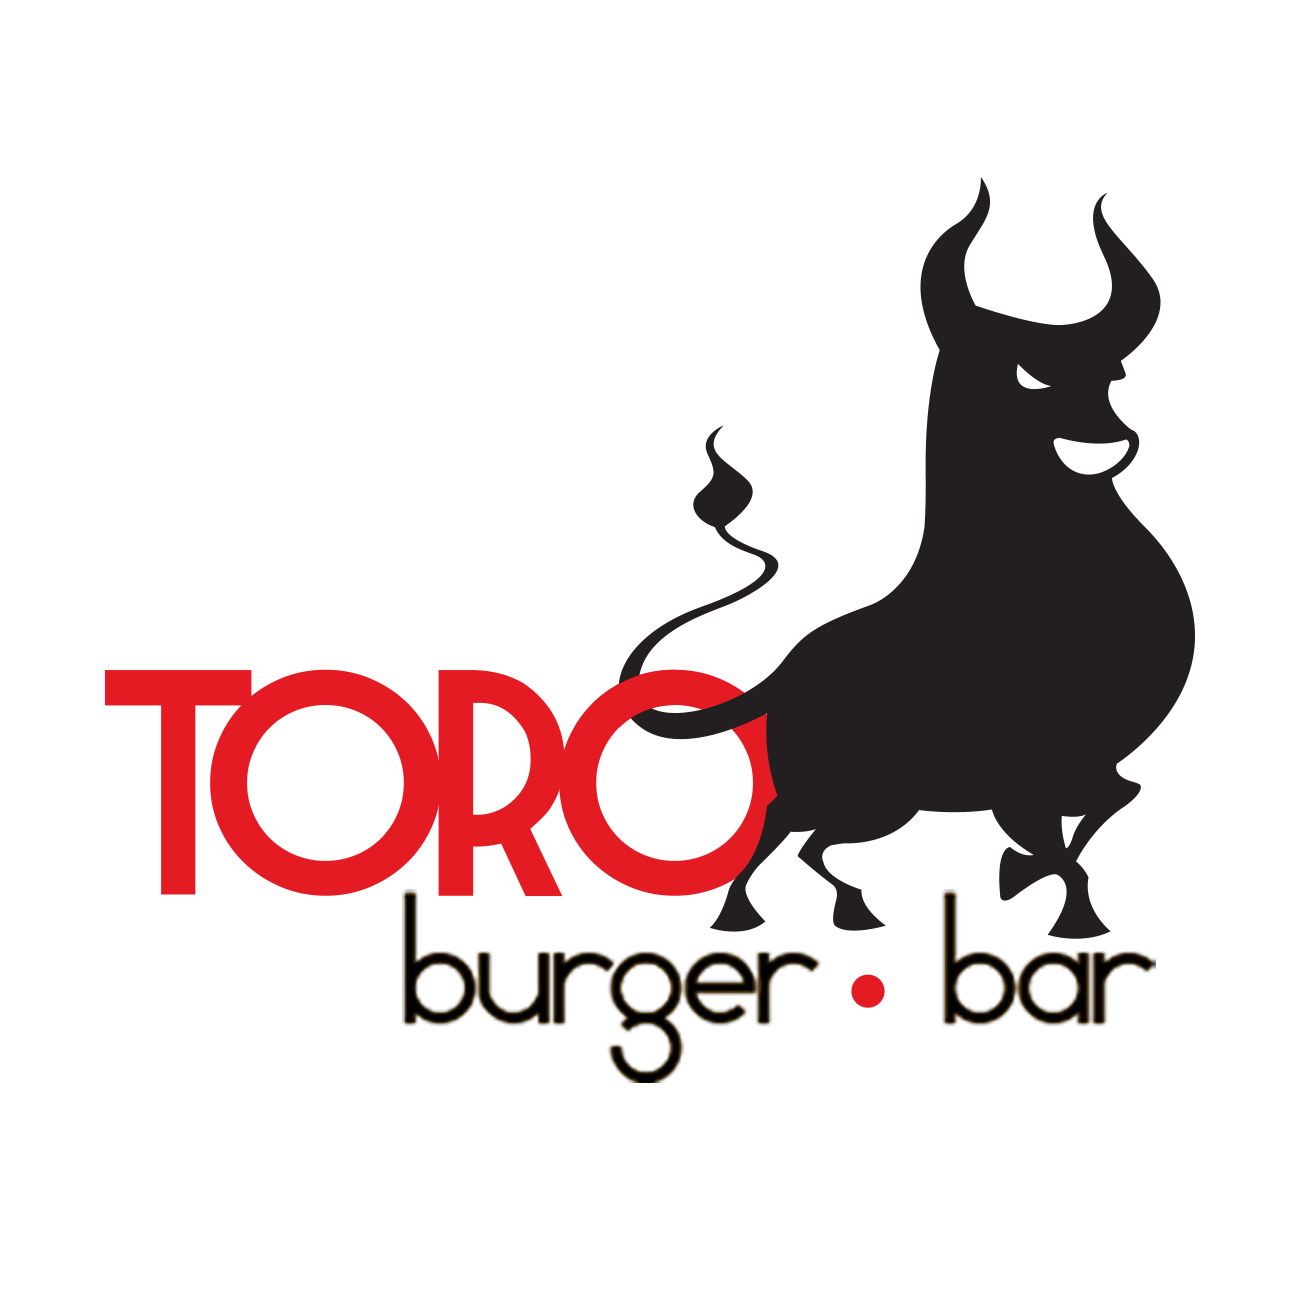 Home Burger Toro Burger Bar